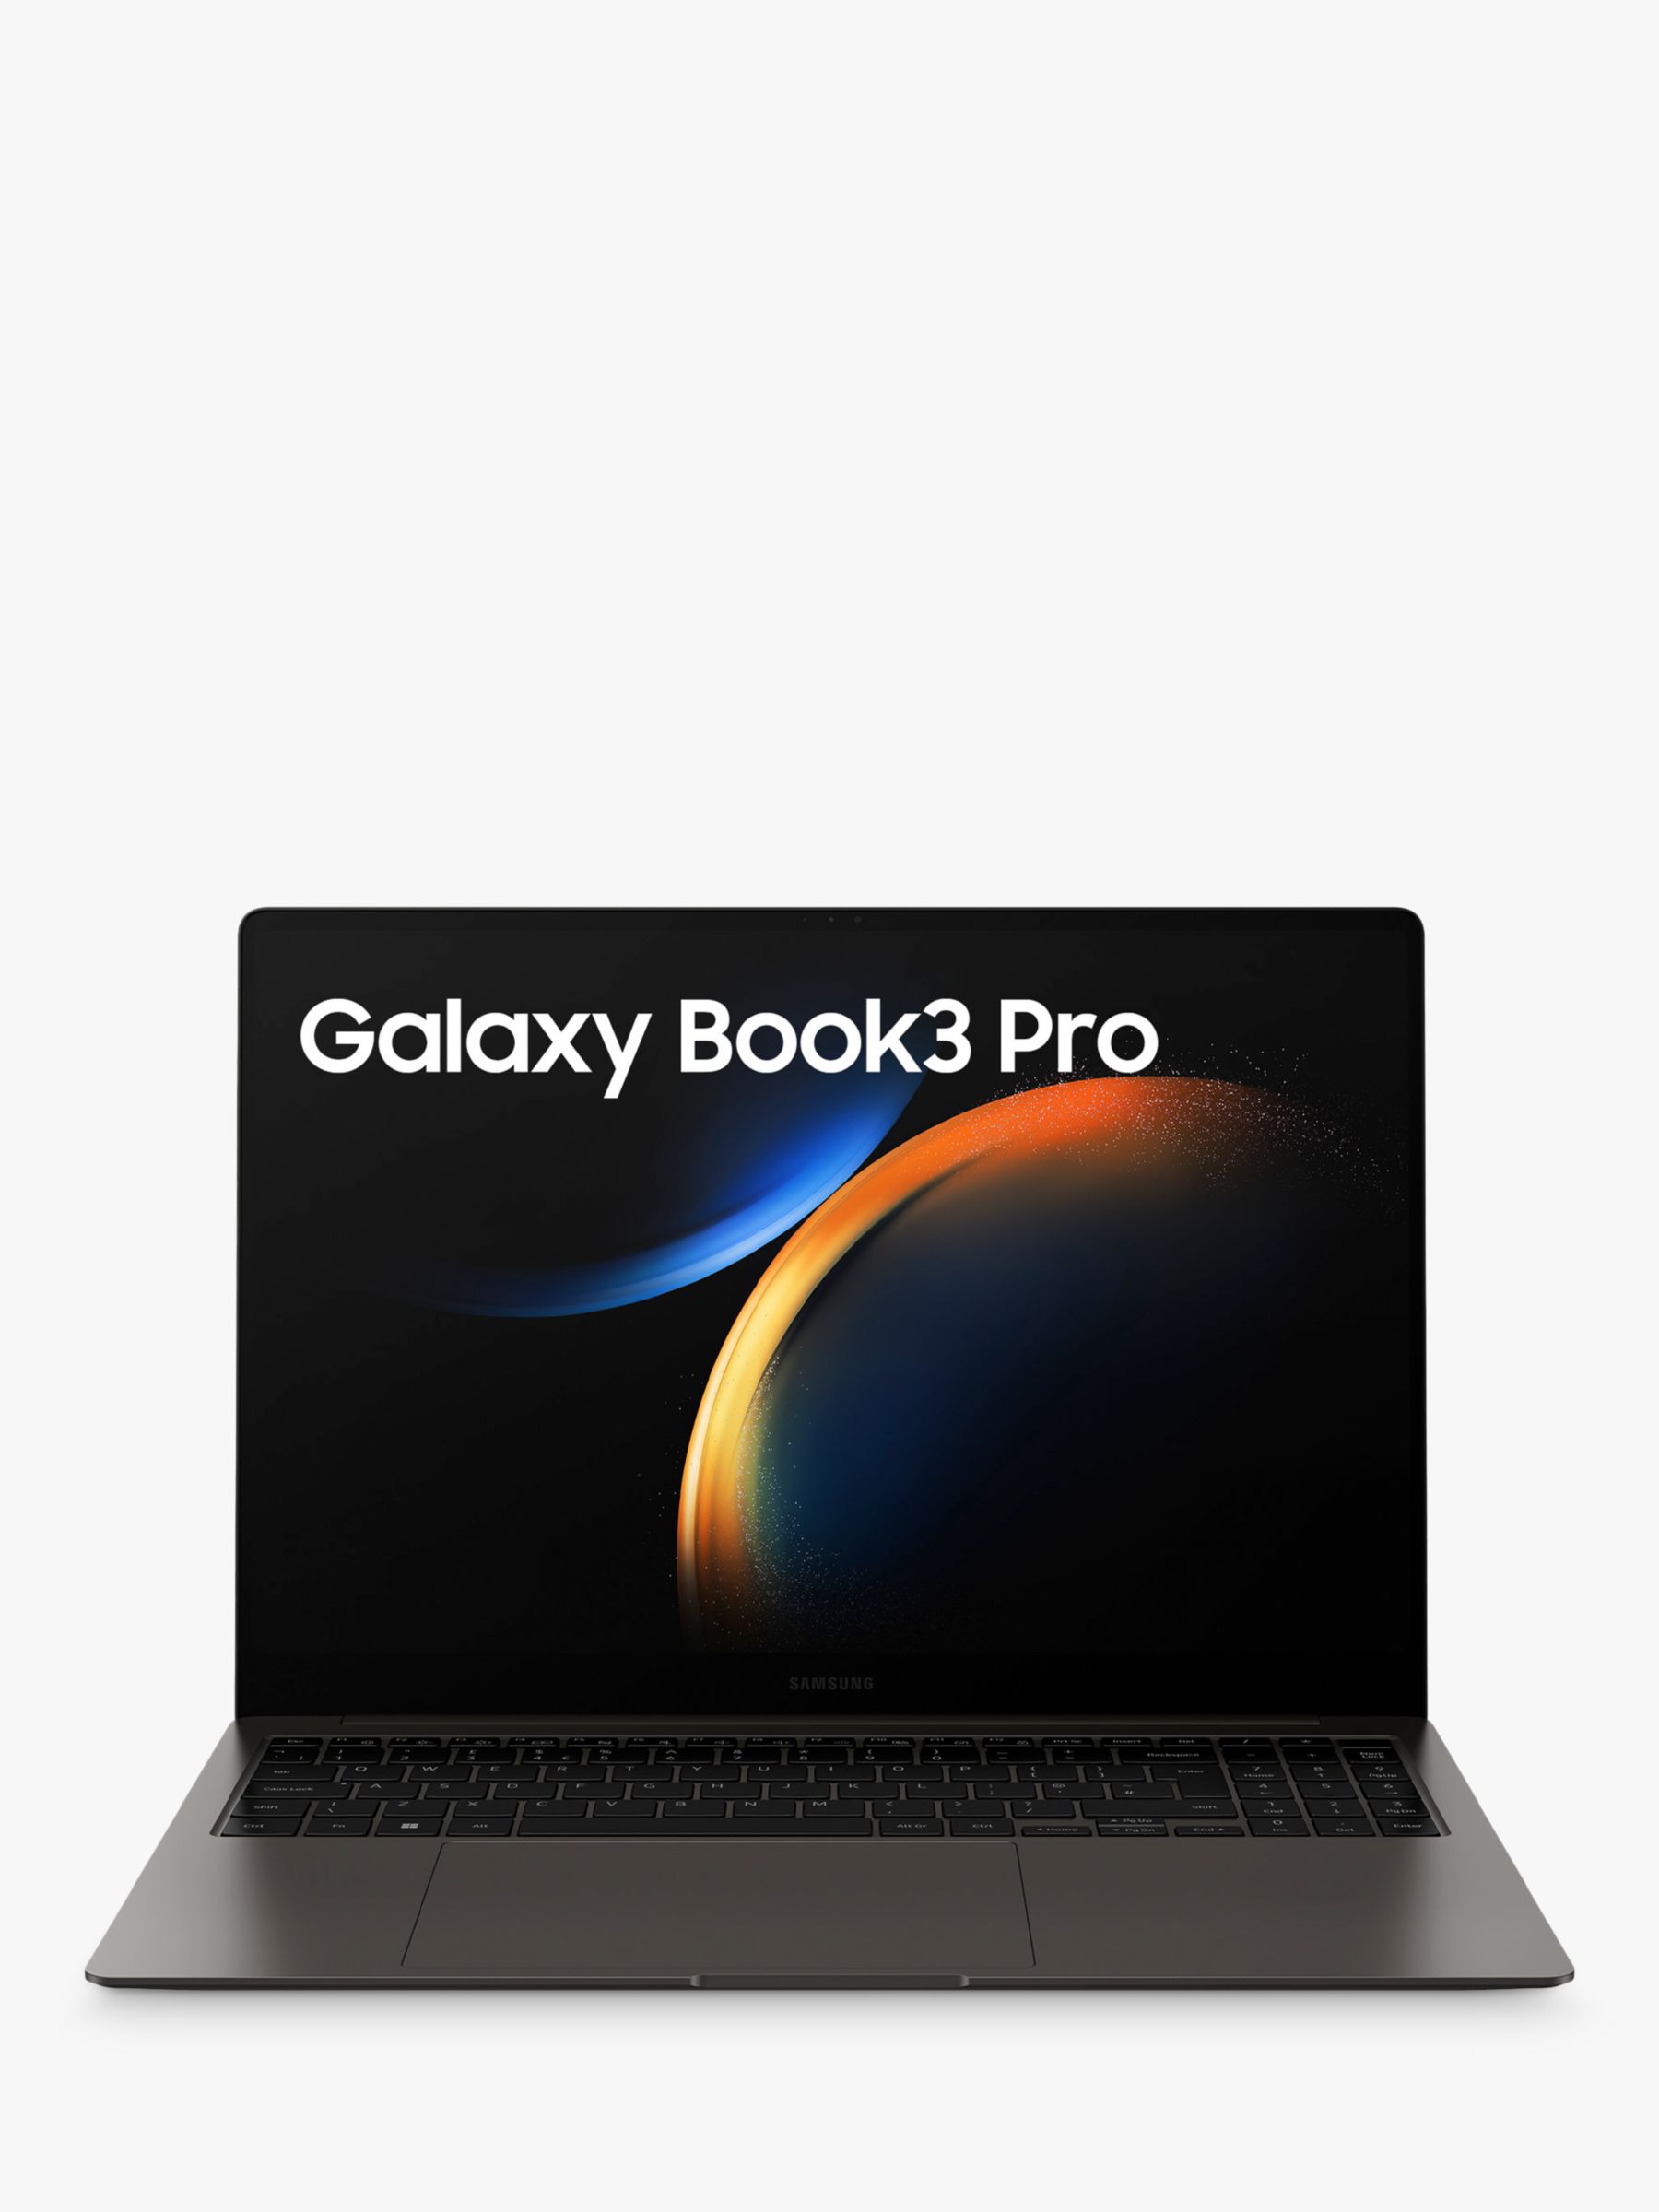 Samsung Galaxy Book3 Pro Laptop, Intel Core i5 Processor, 8GB RAM